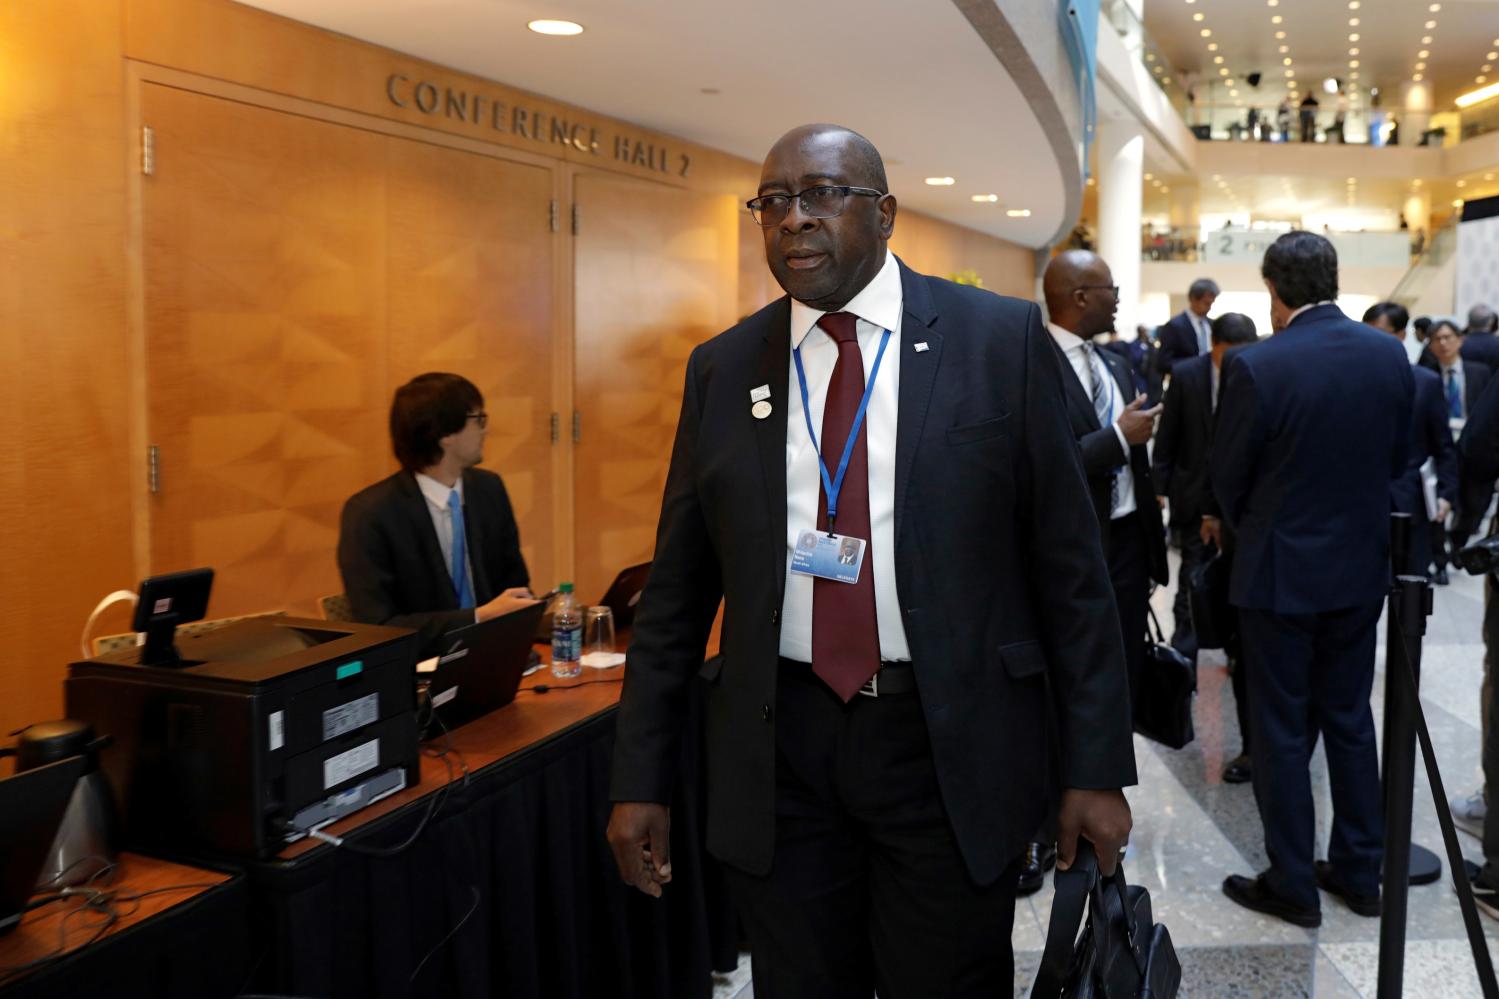 South Africa's Finance Minister Nhlanhla Nene arrives at G-20 plenary during the IMF/World Bank spring meeting in Washington, U.S., April 20, 2018. REUTERS/Yuri Gripas - RC1E22652BA0